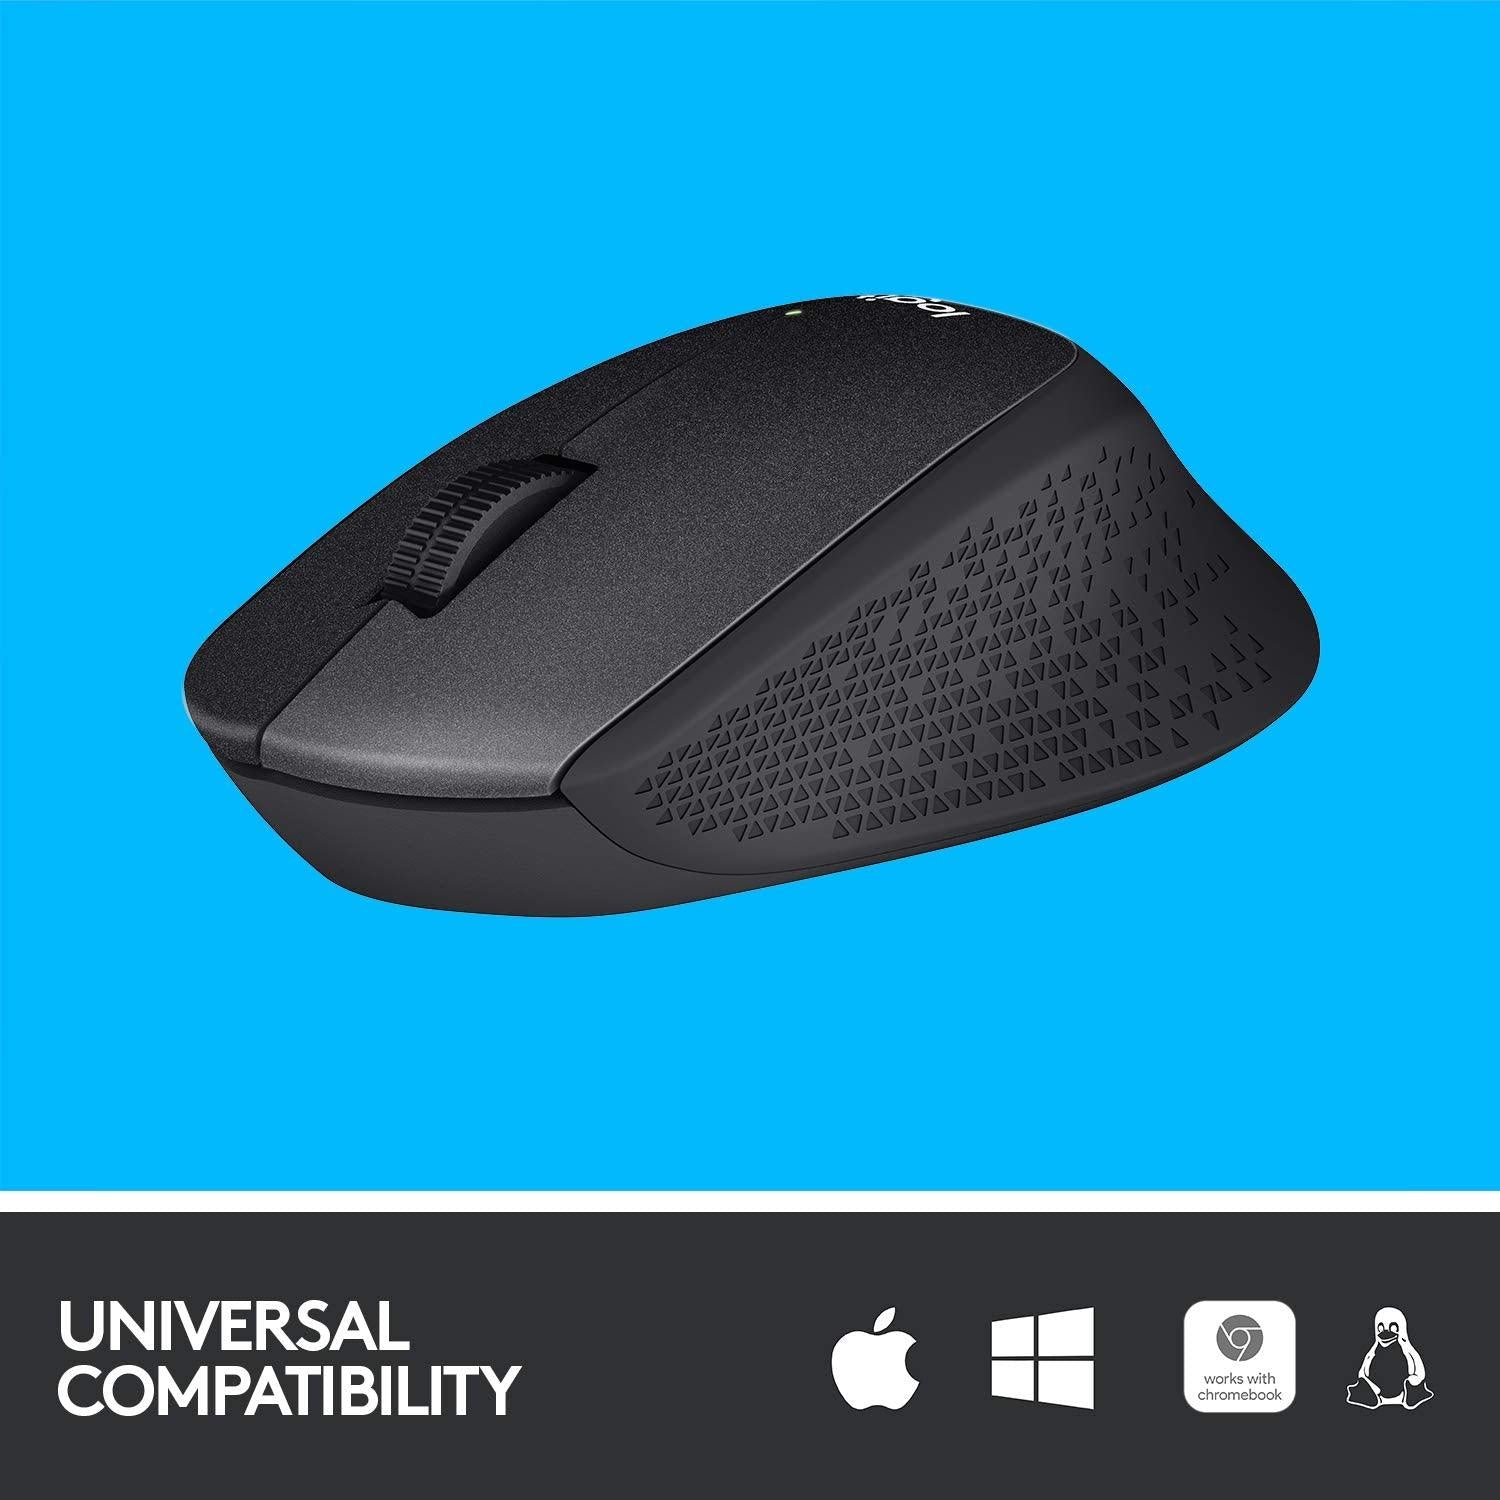 Logitech Full-Size Wireless Mouse, USB Nano Receiver, 1000 DPI Optical  Tracking, Ambidextrous, Red 